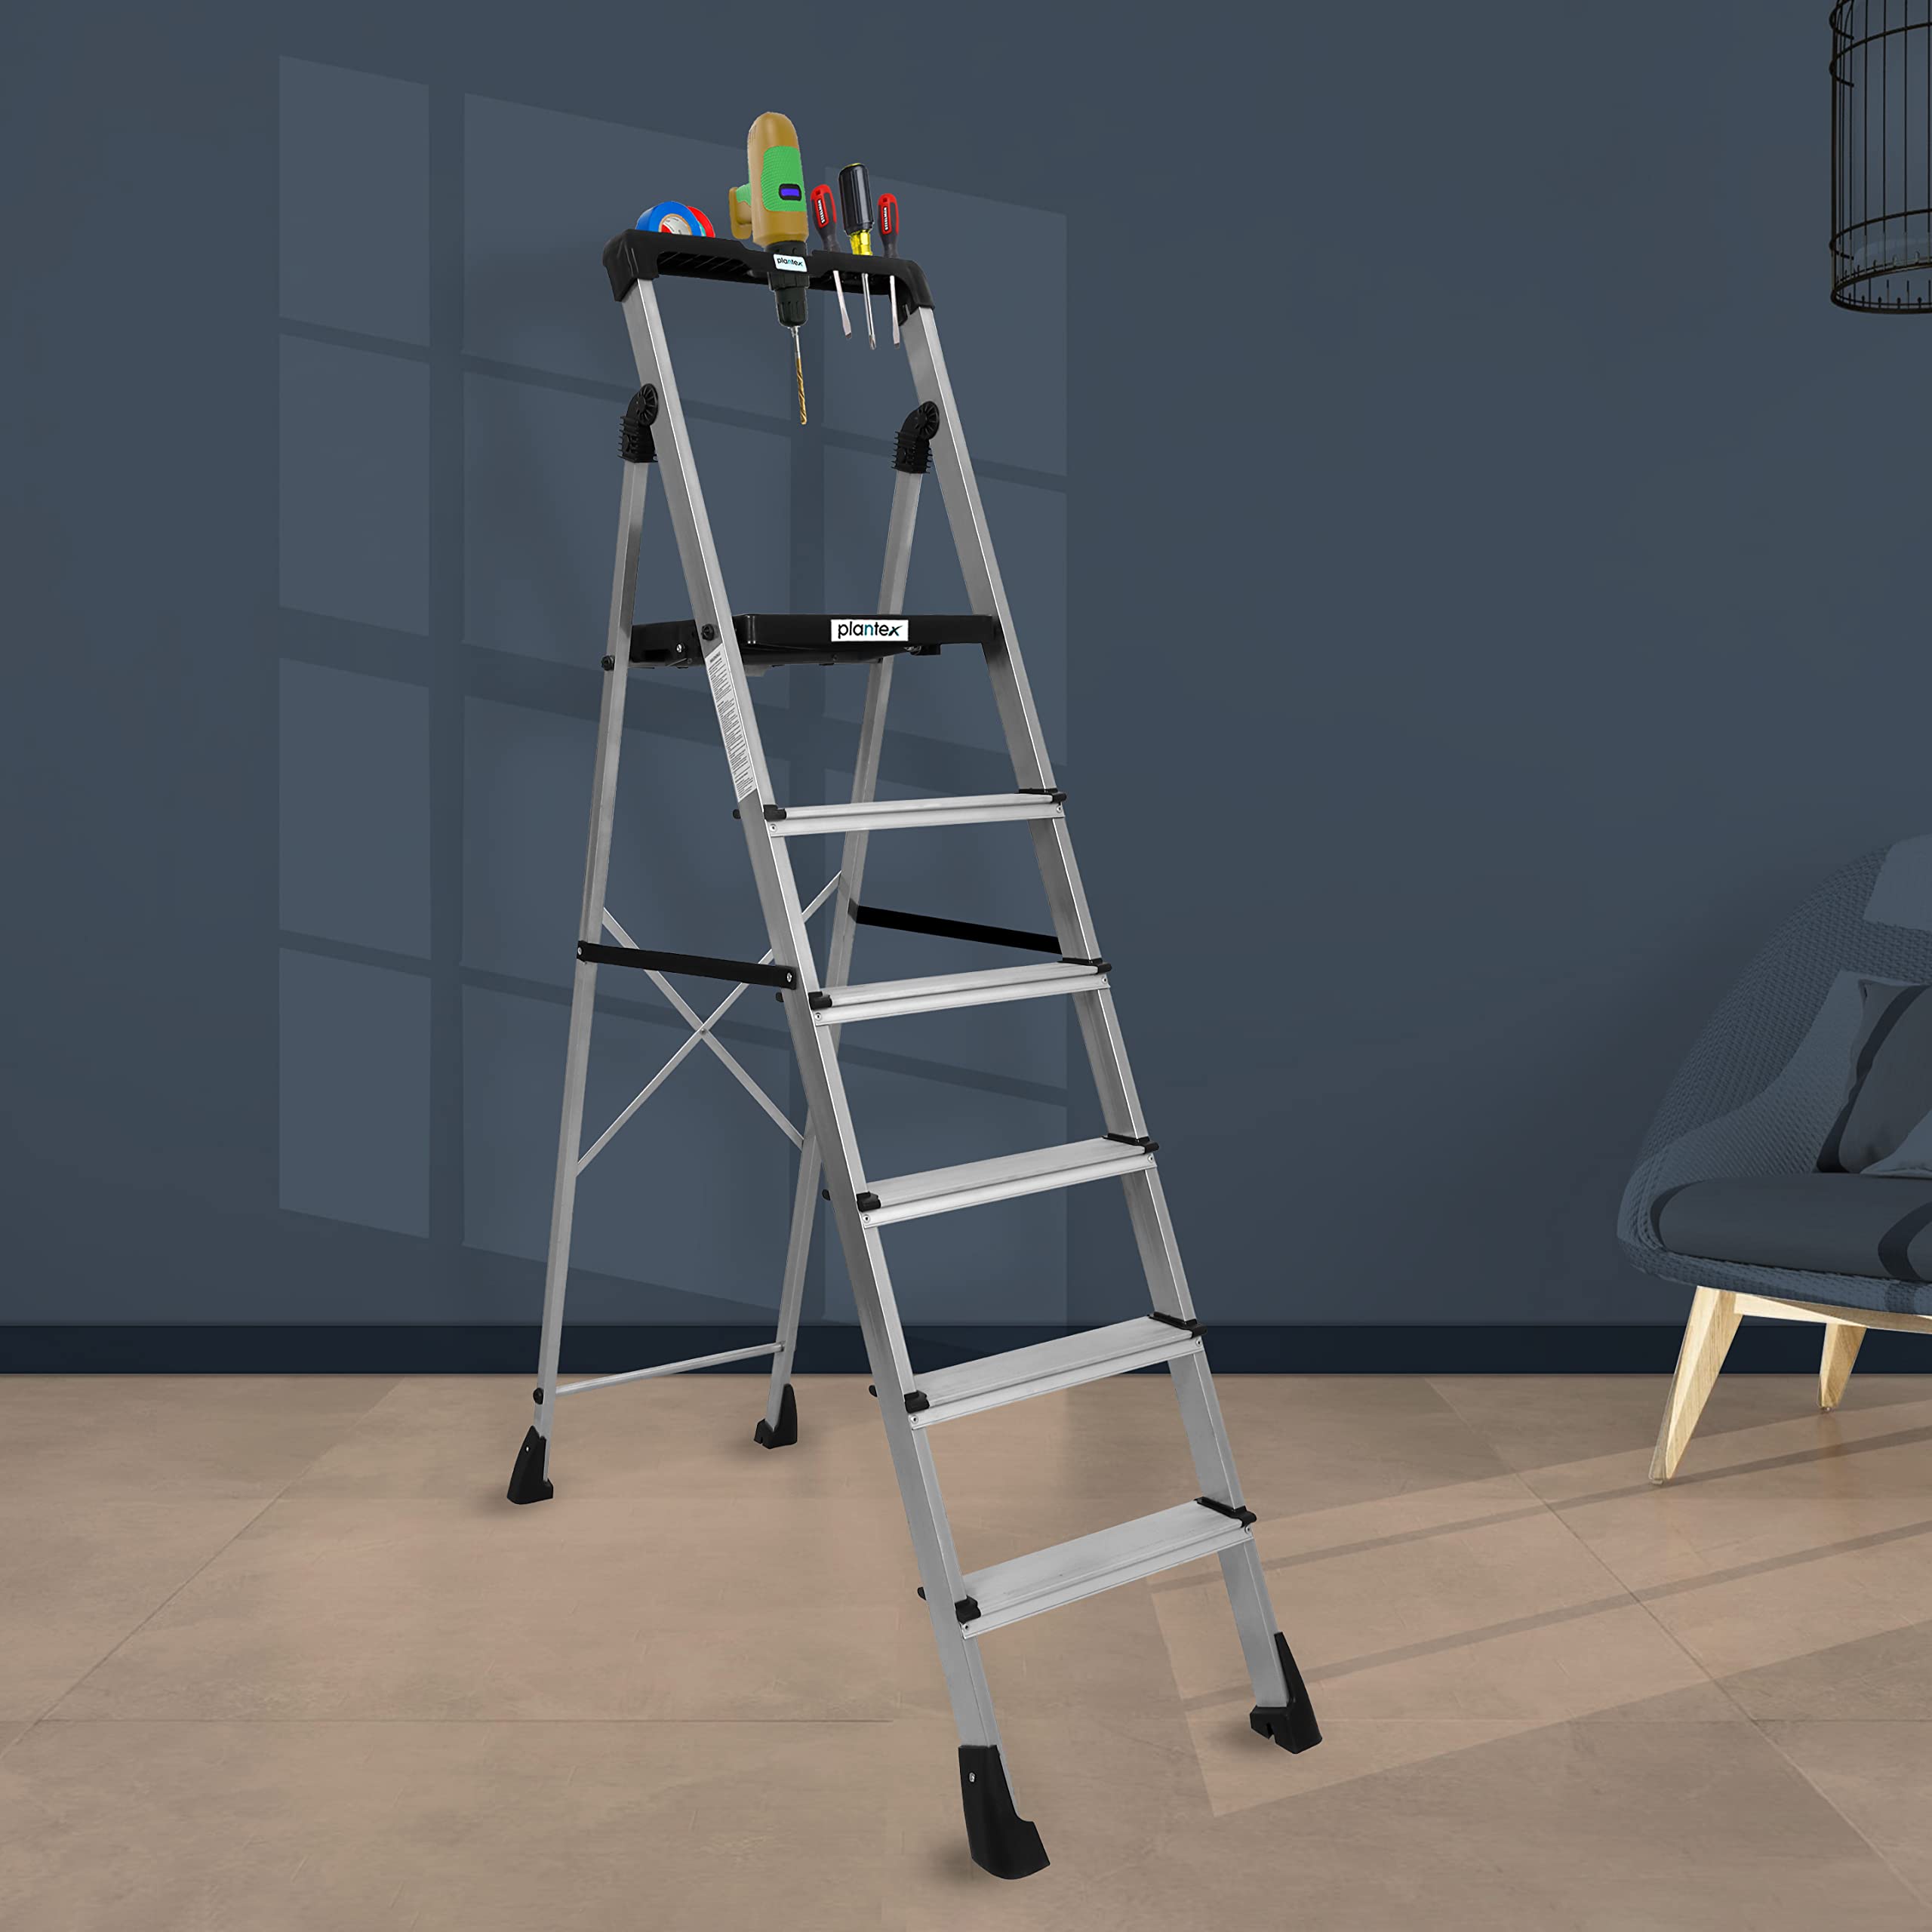 Plantex Thor Aluminium Step Folding Ladder 6 Step for Home with Advanced Locking System - 6 Step Ladder (Silver & Black)